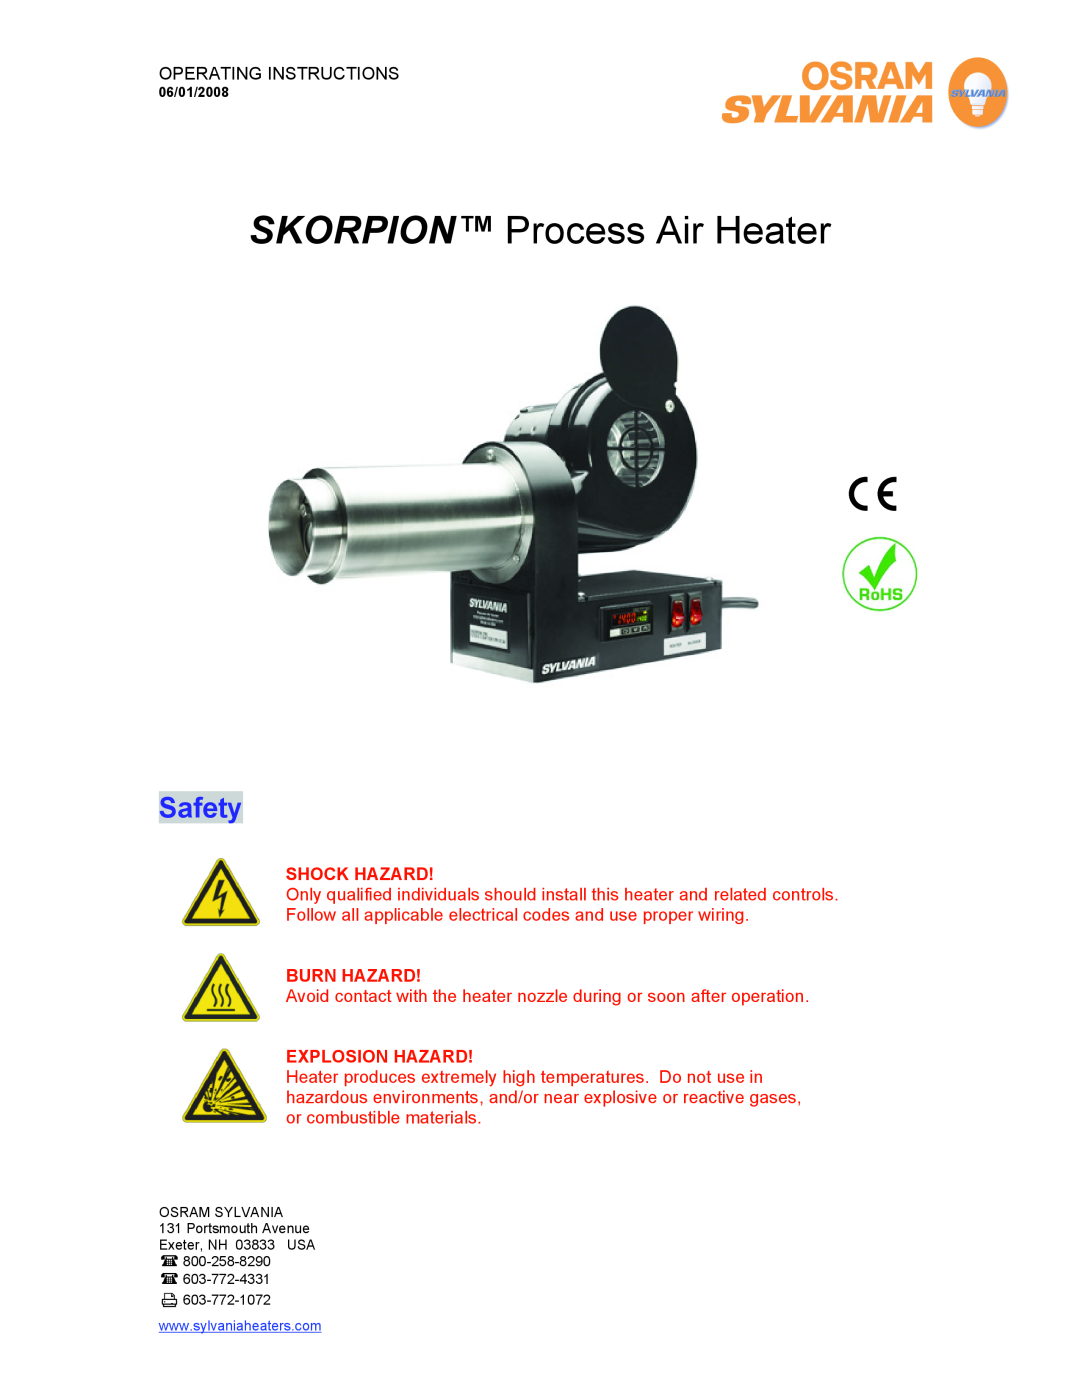 Sylvania F075615 operating instructions SKORPION Model, SKORPION Process Air Heater, Shock Hazard, Burn Hazard 